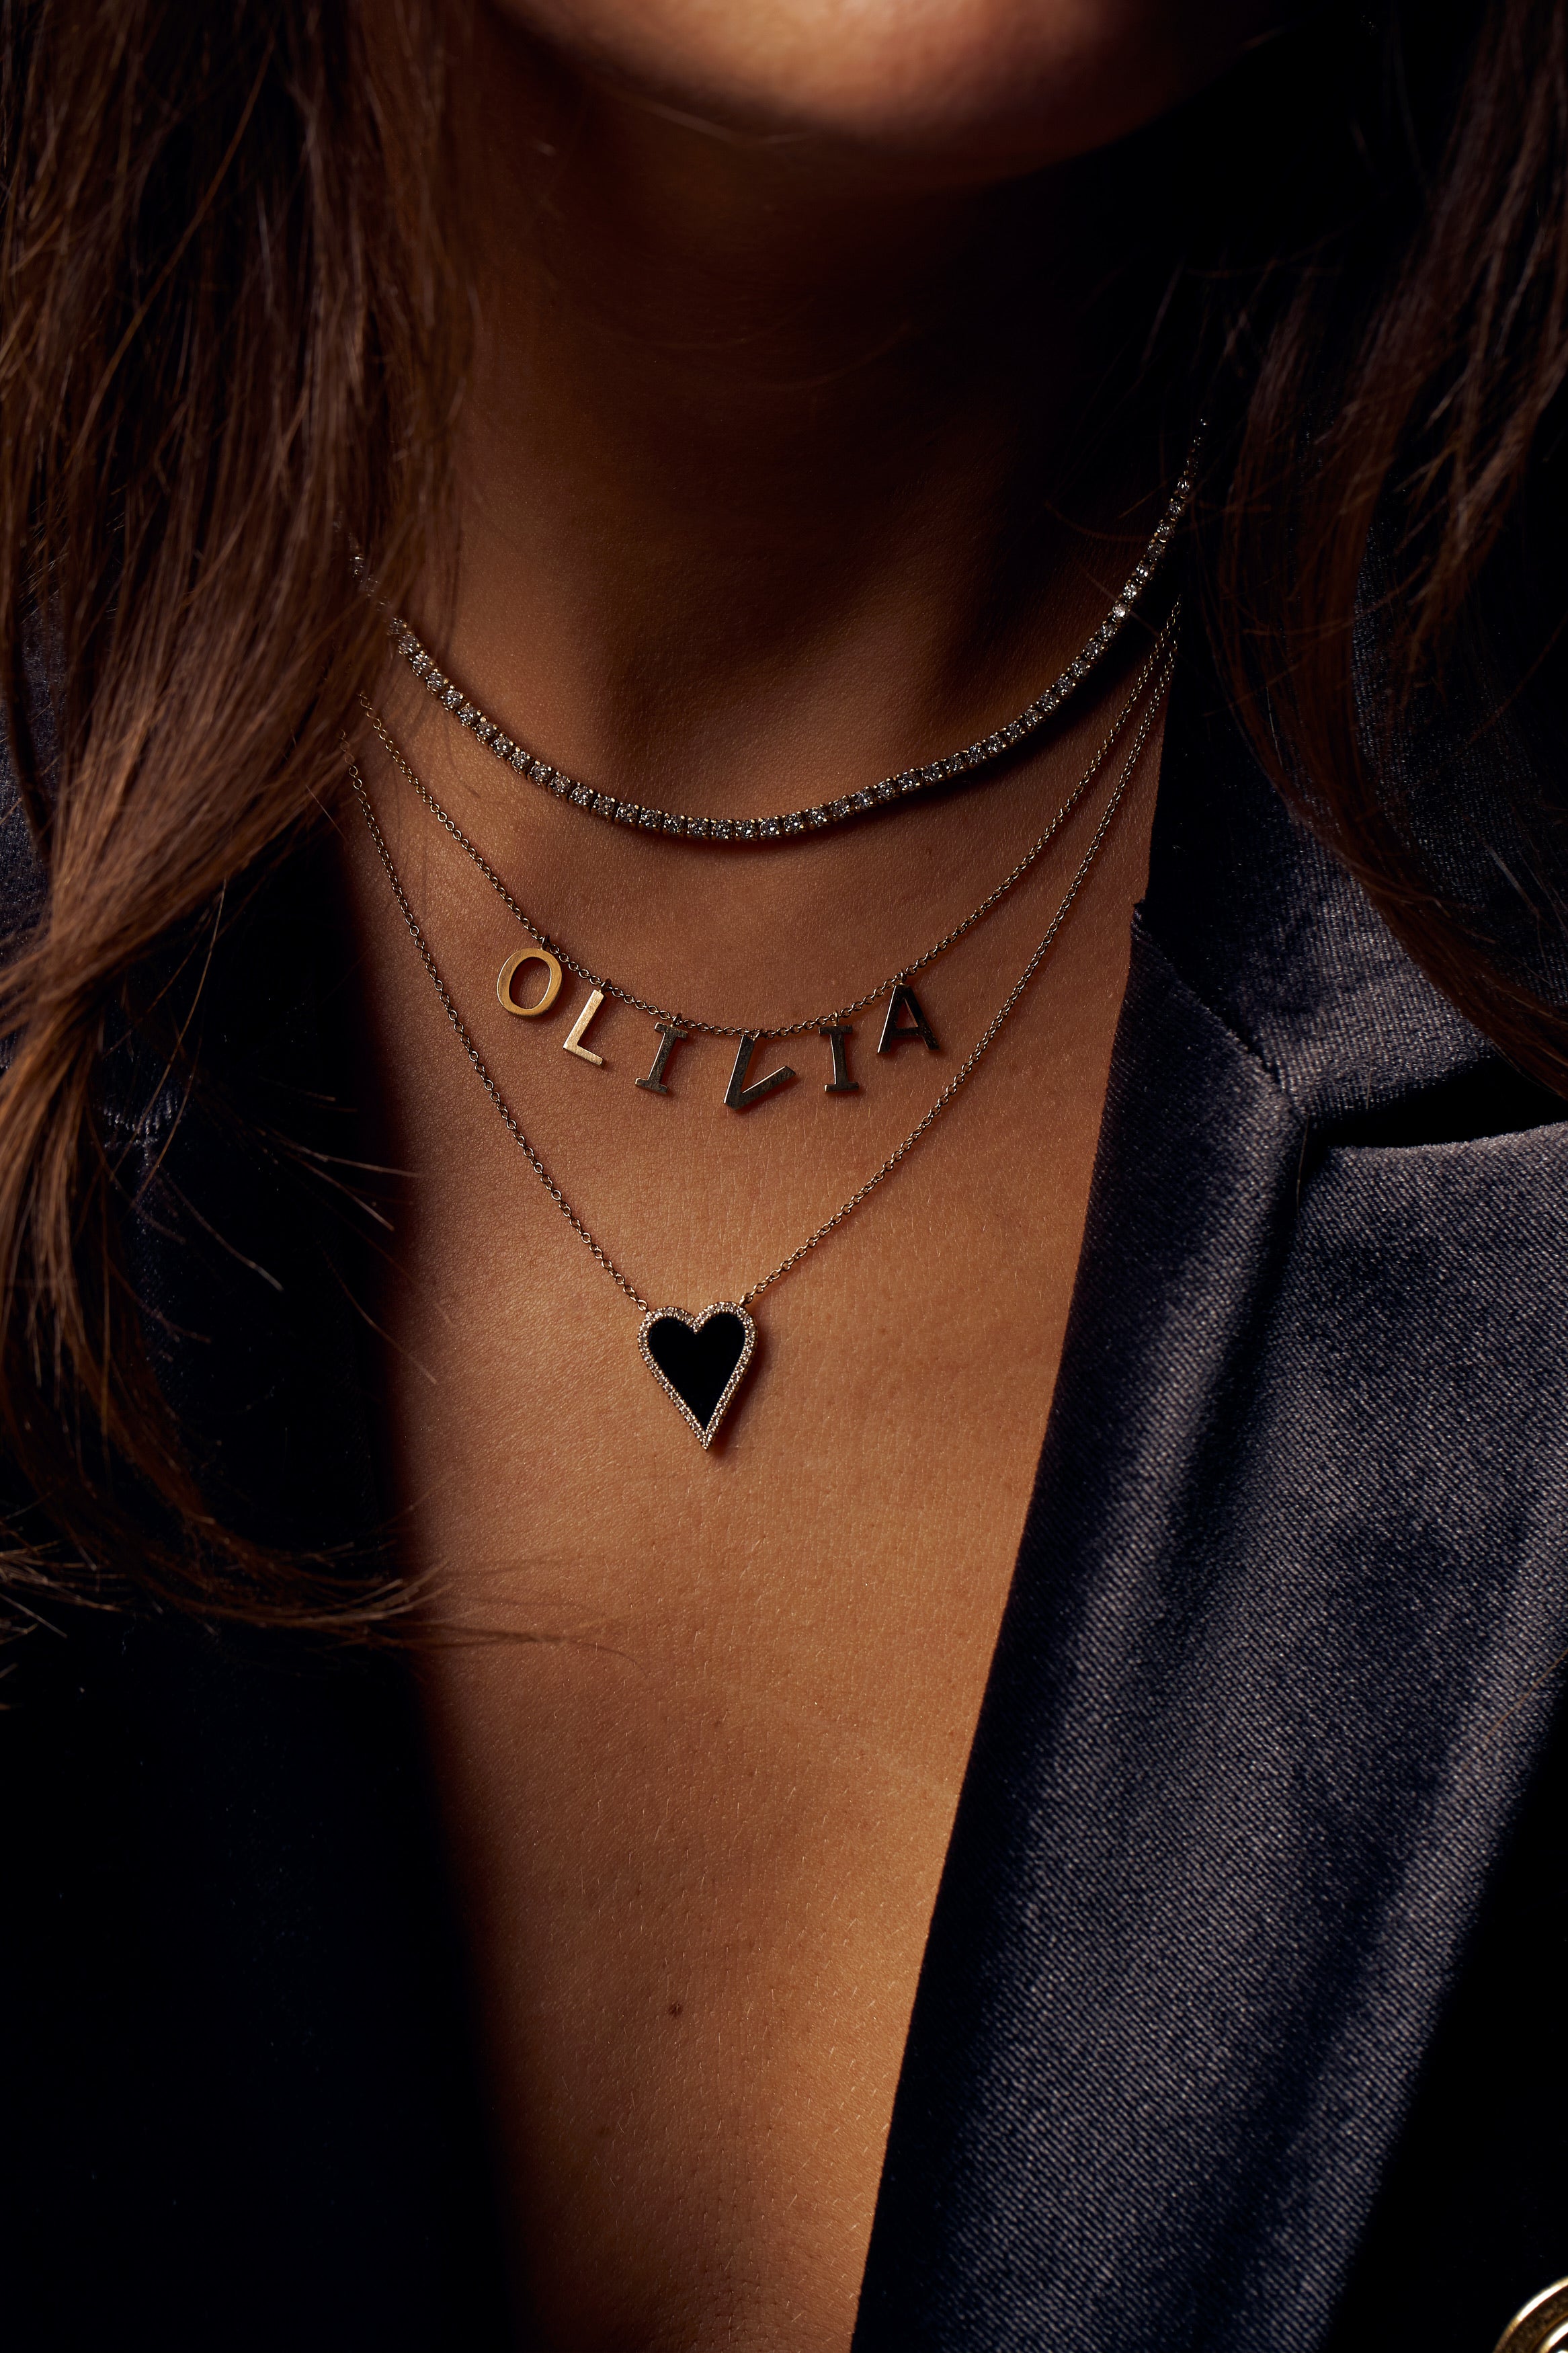 Black Onyx Diamond Border Pointy Heart Necklace